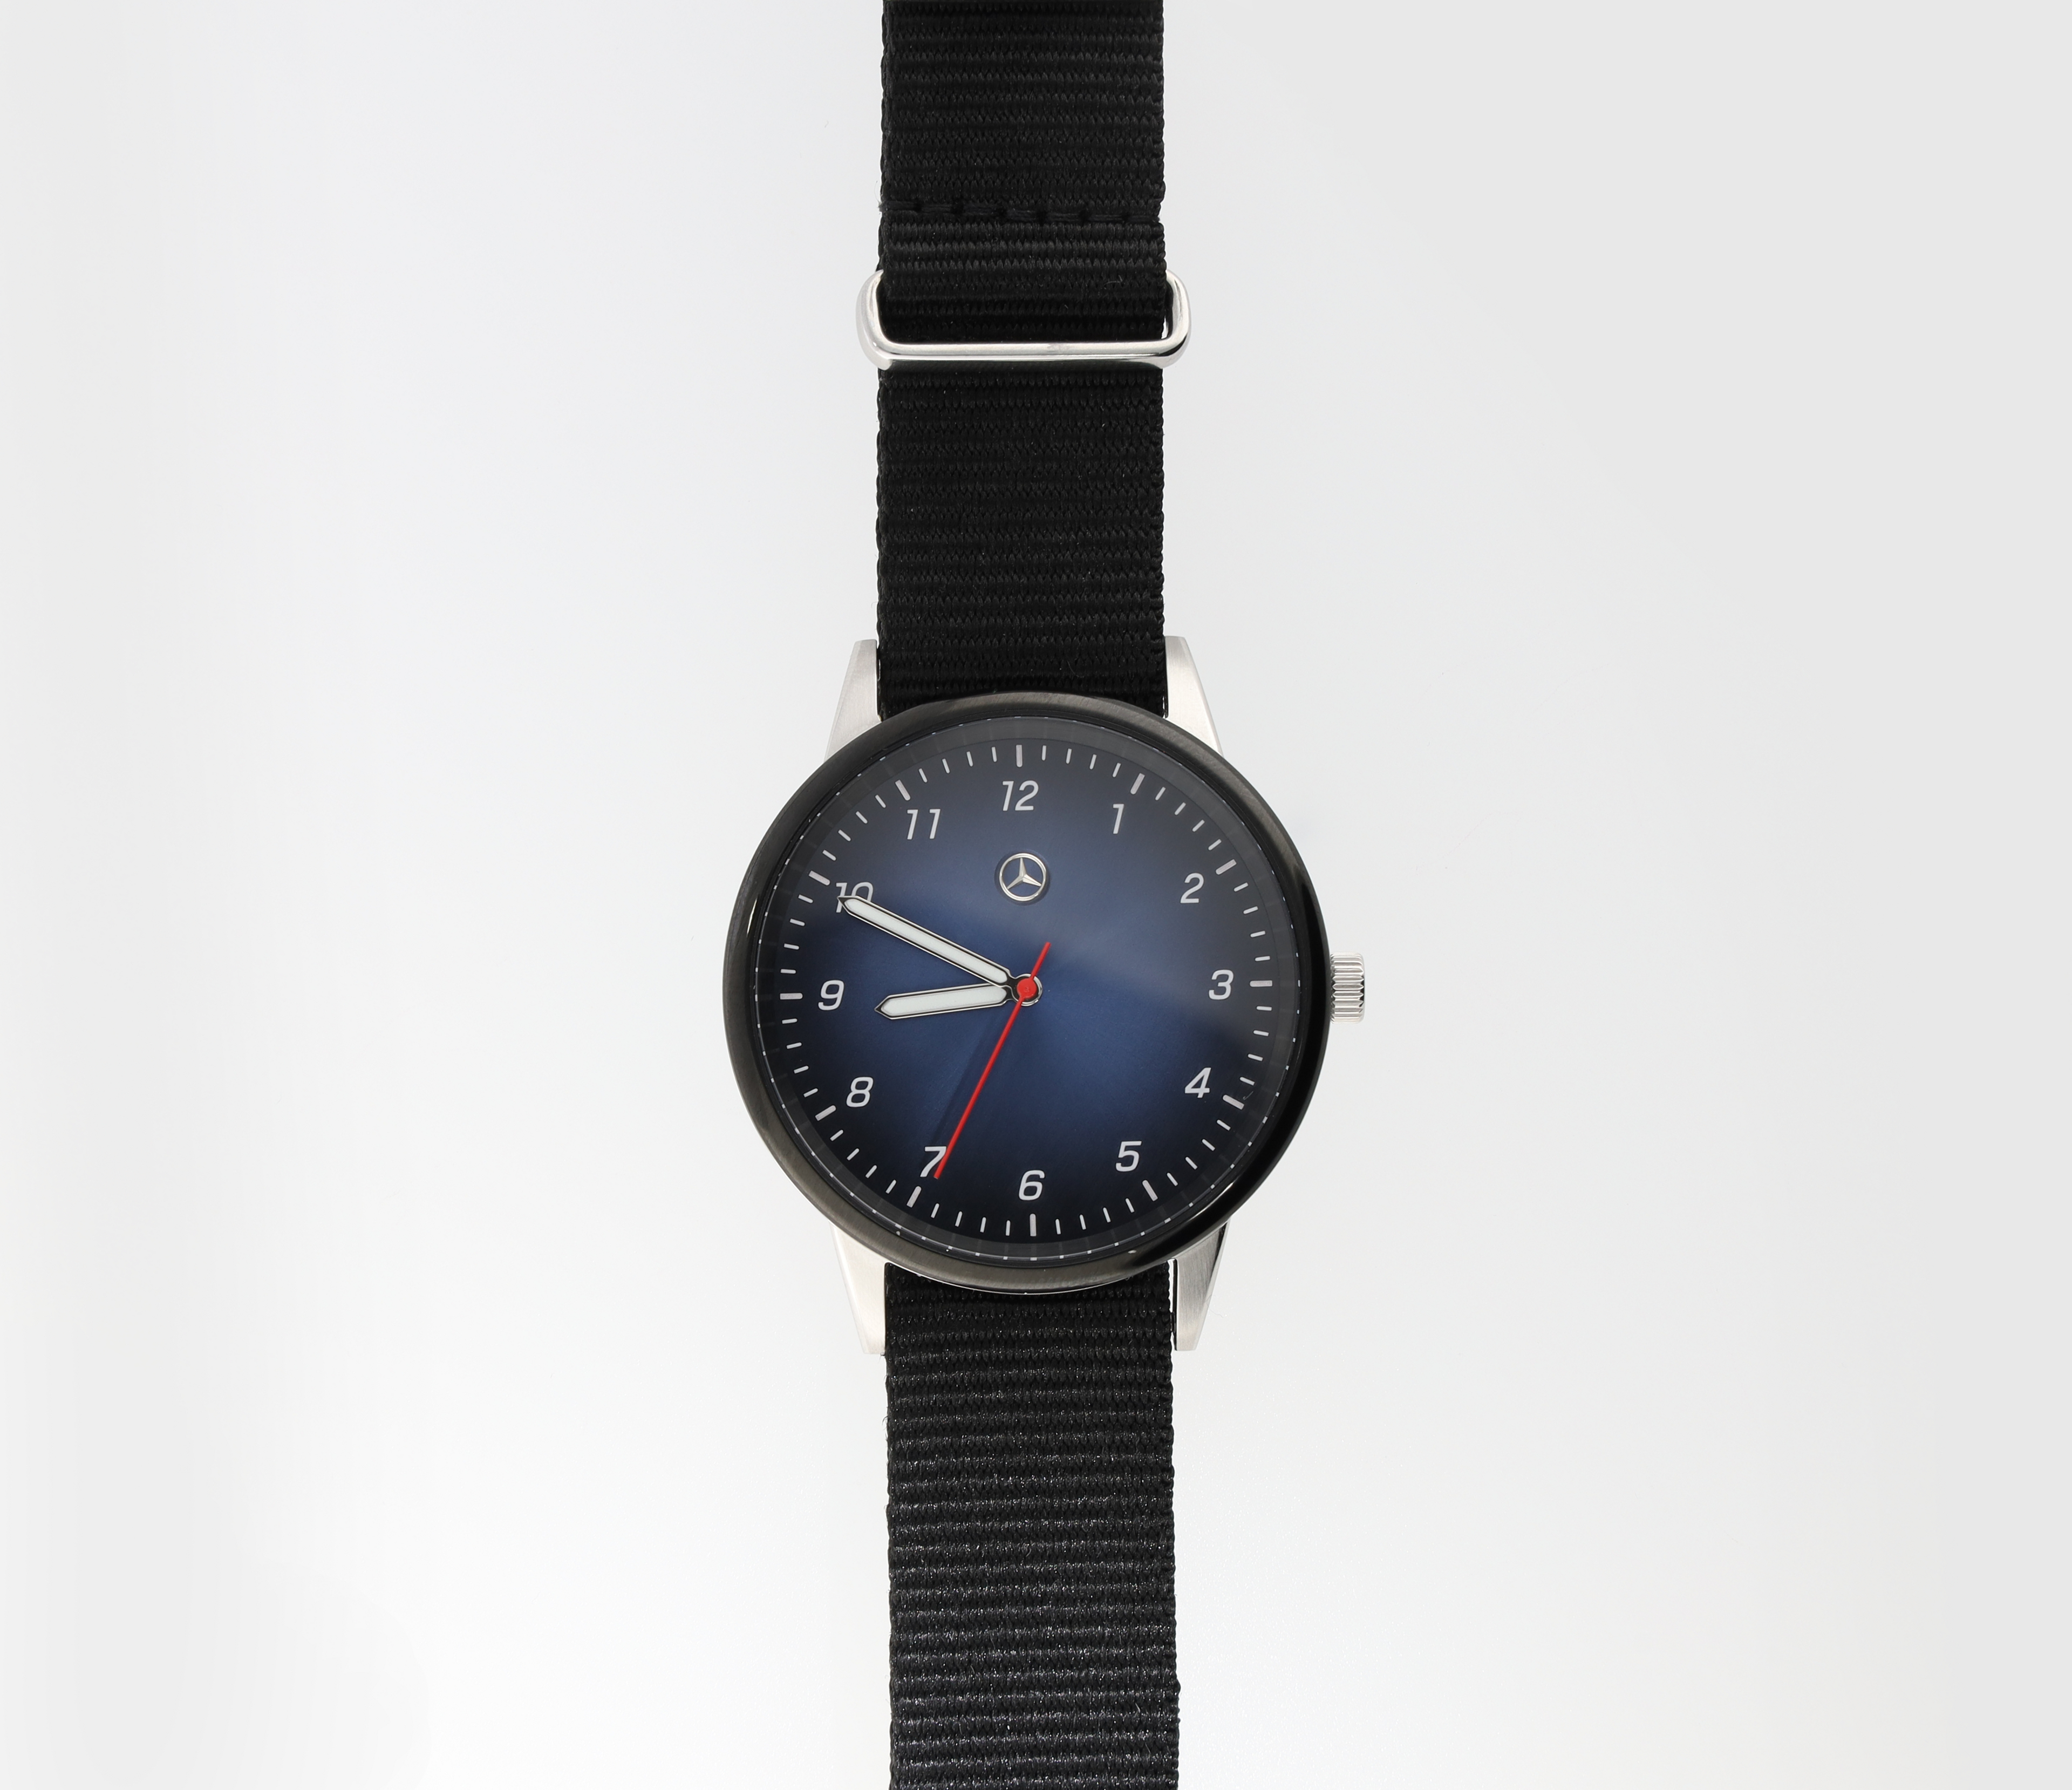 Armbanduhr Herren - schwarz / blau / silberfarben, Edelstahl